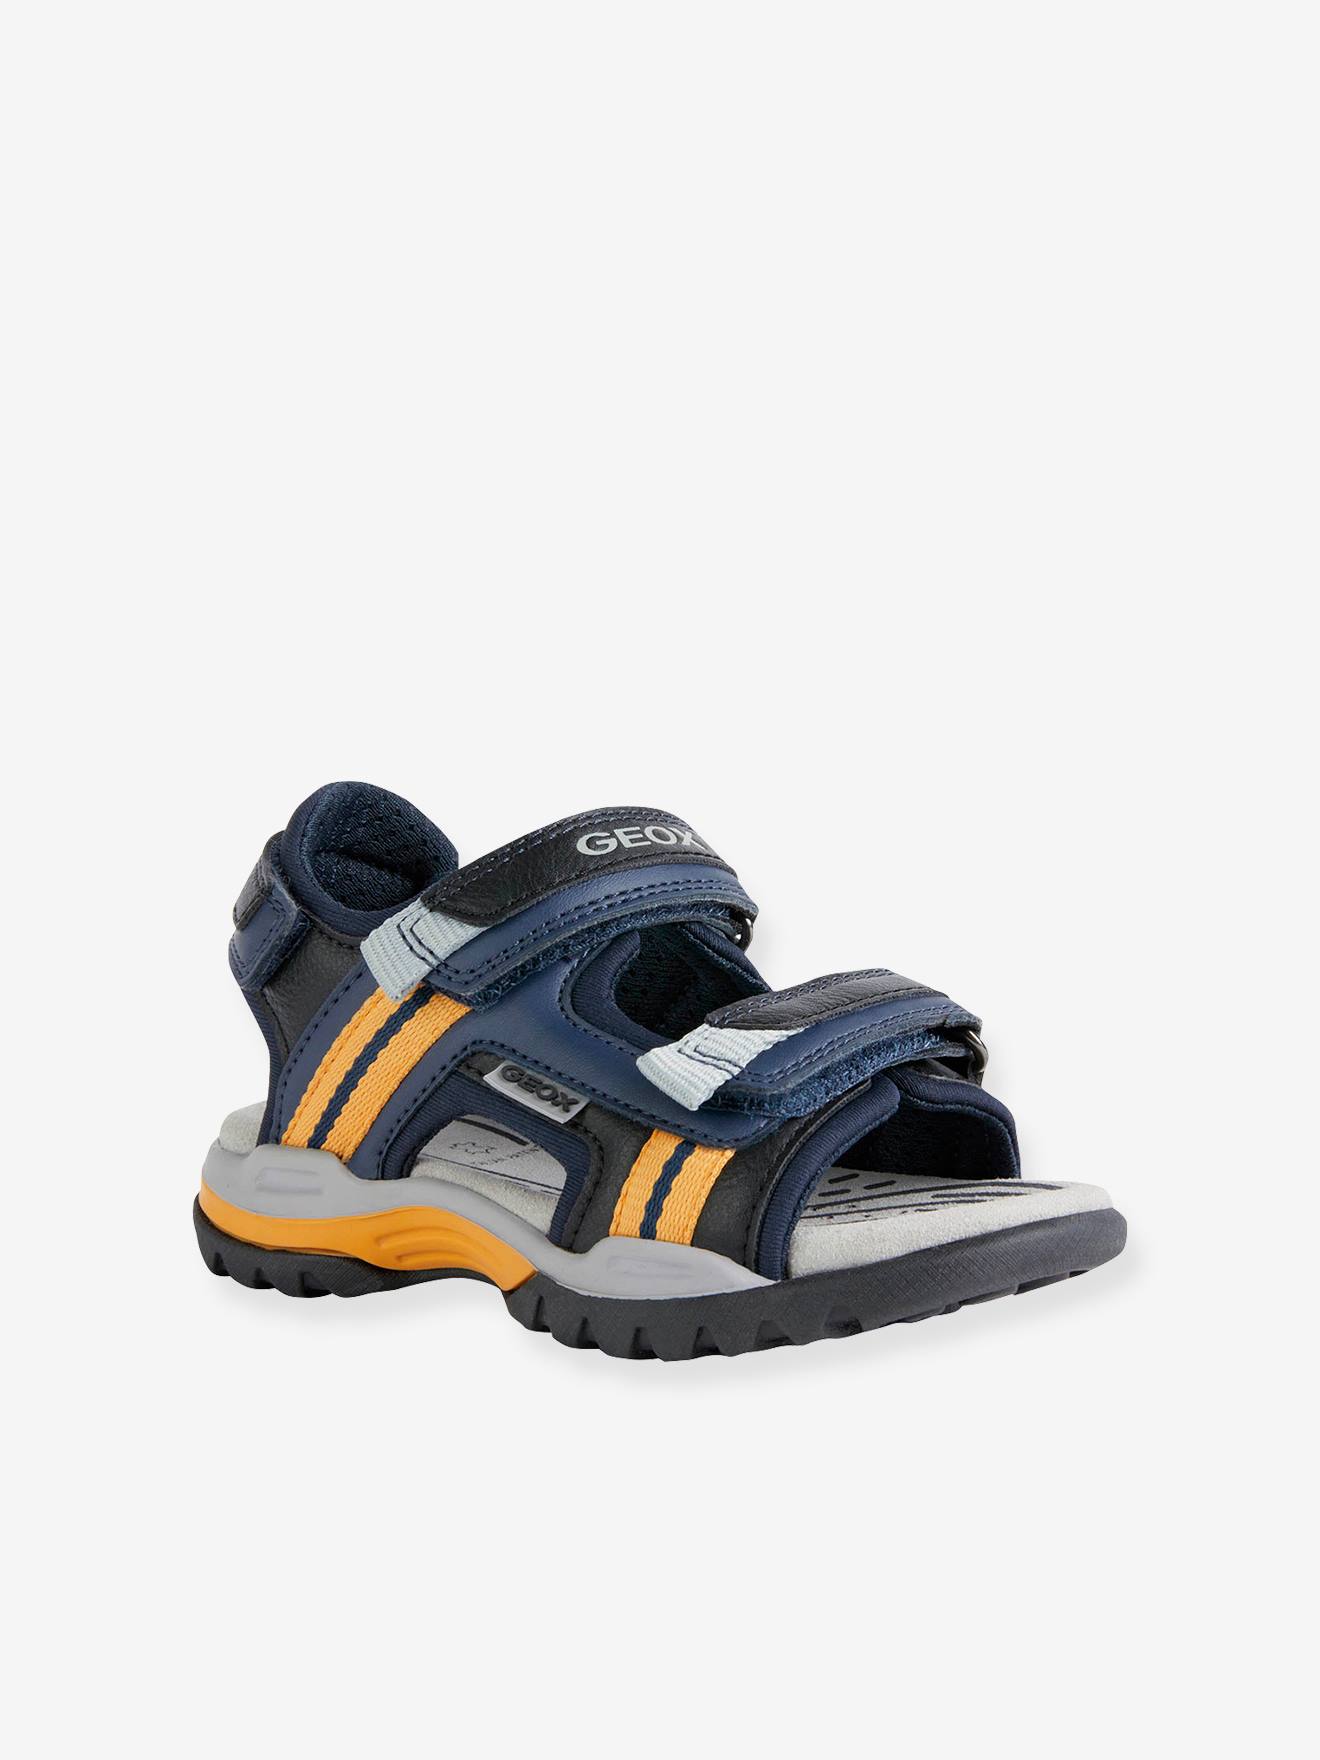 Bacteriën De schuld geven Gezamenlijke selectie Sandals for Boys, J. Borealis B.A by GEOX® - blue medium solid, Shoes